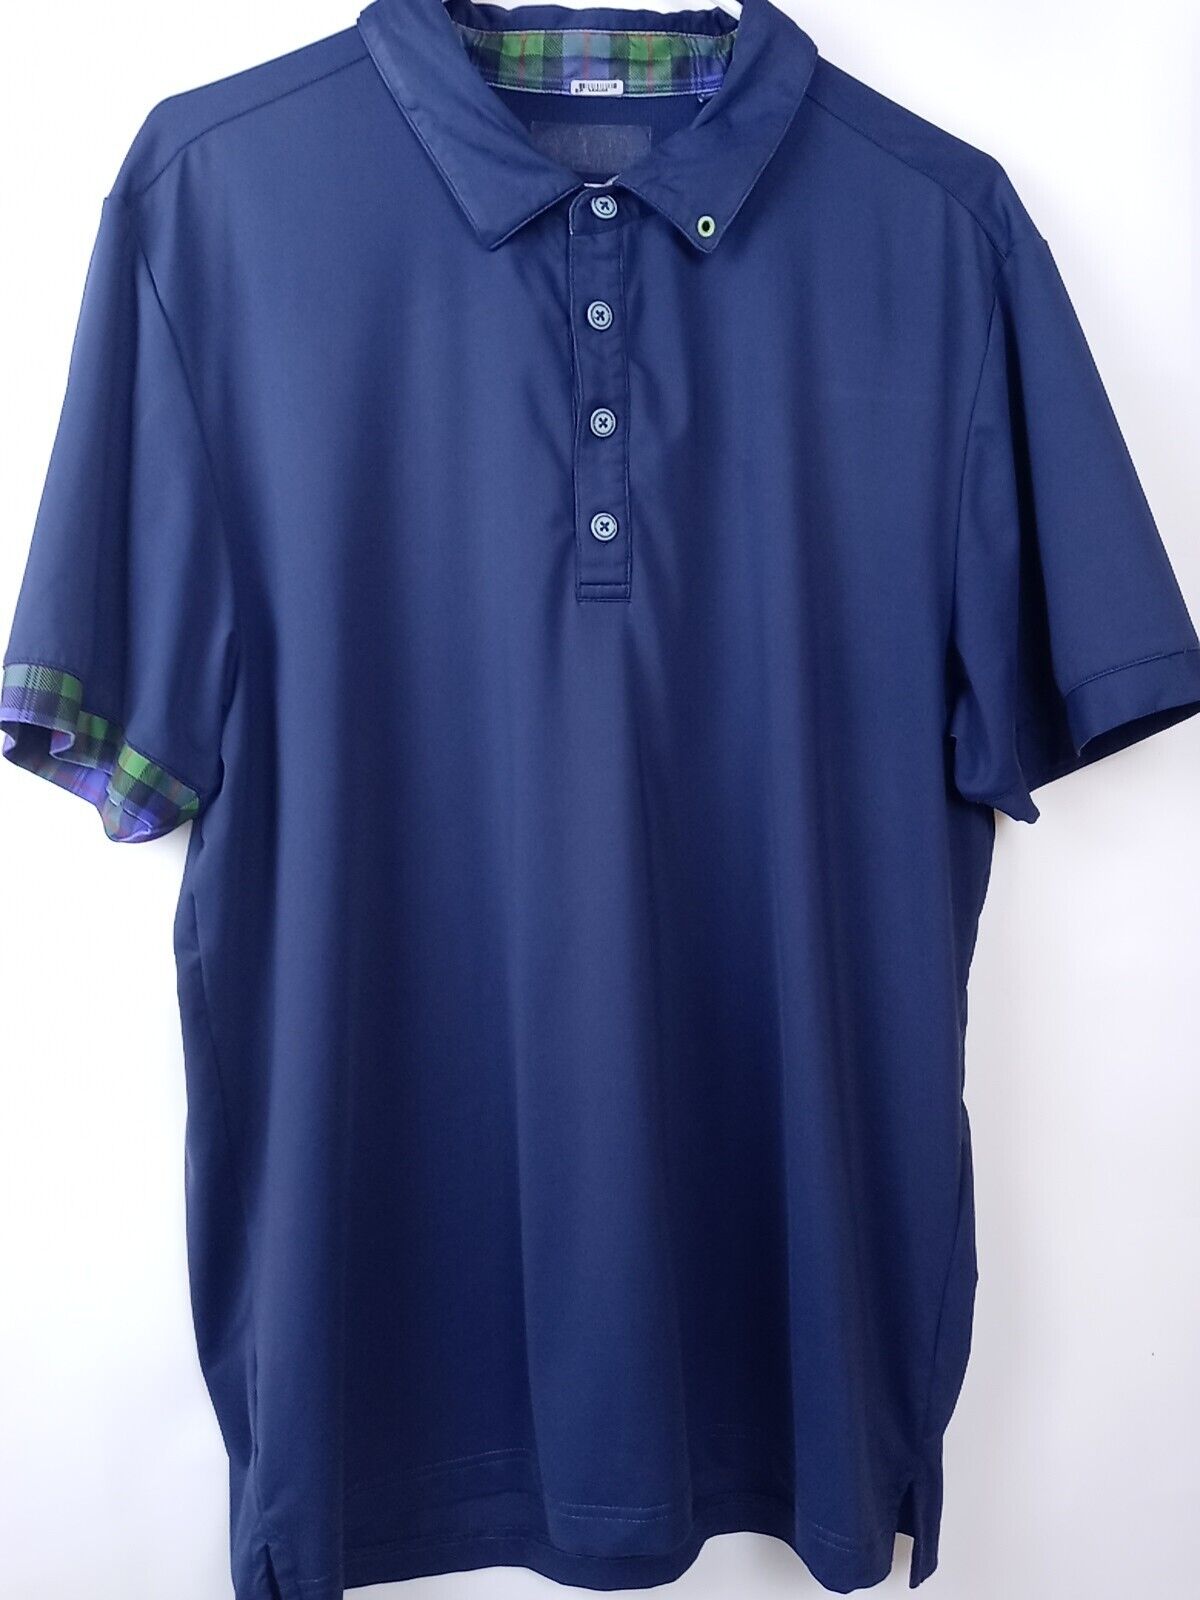 William Murray Men\'s (L) Blue Short Sleeve Performance Polo Golf Shirt